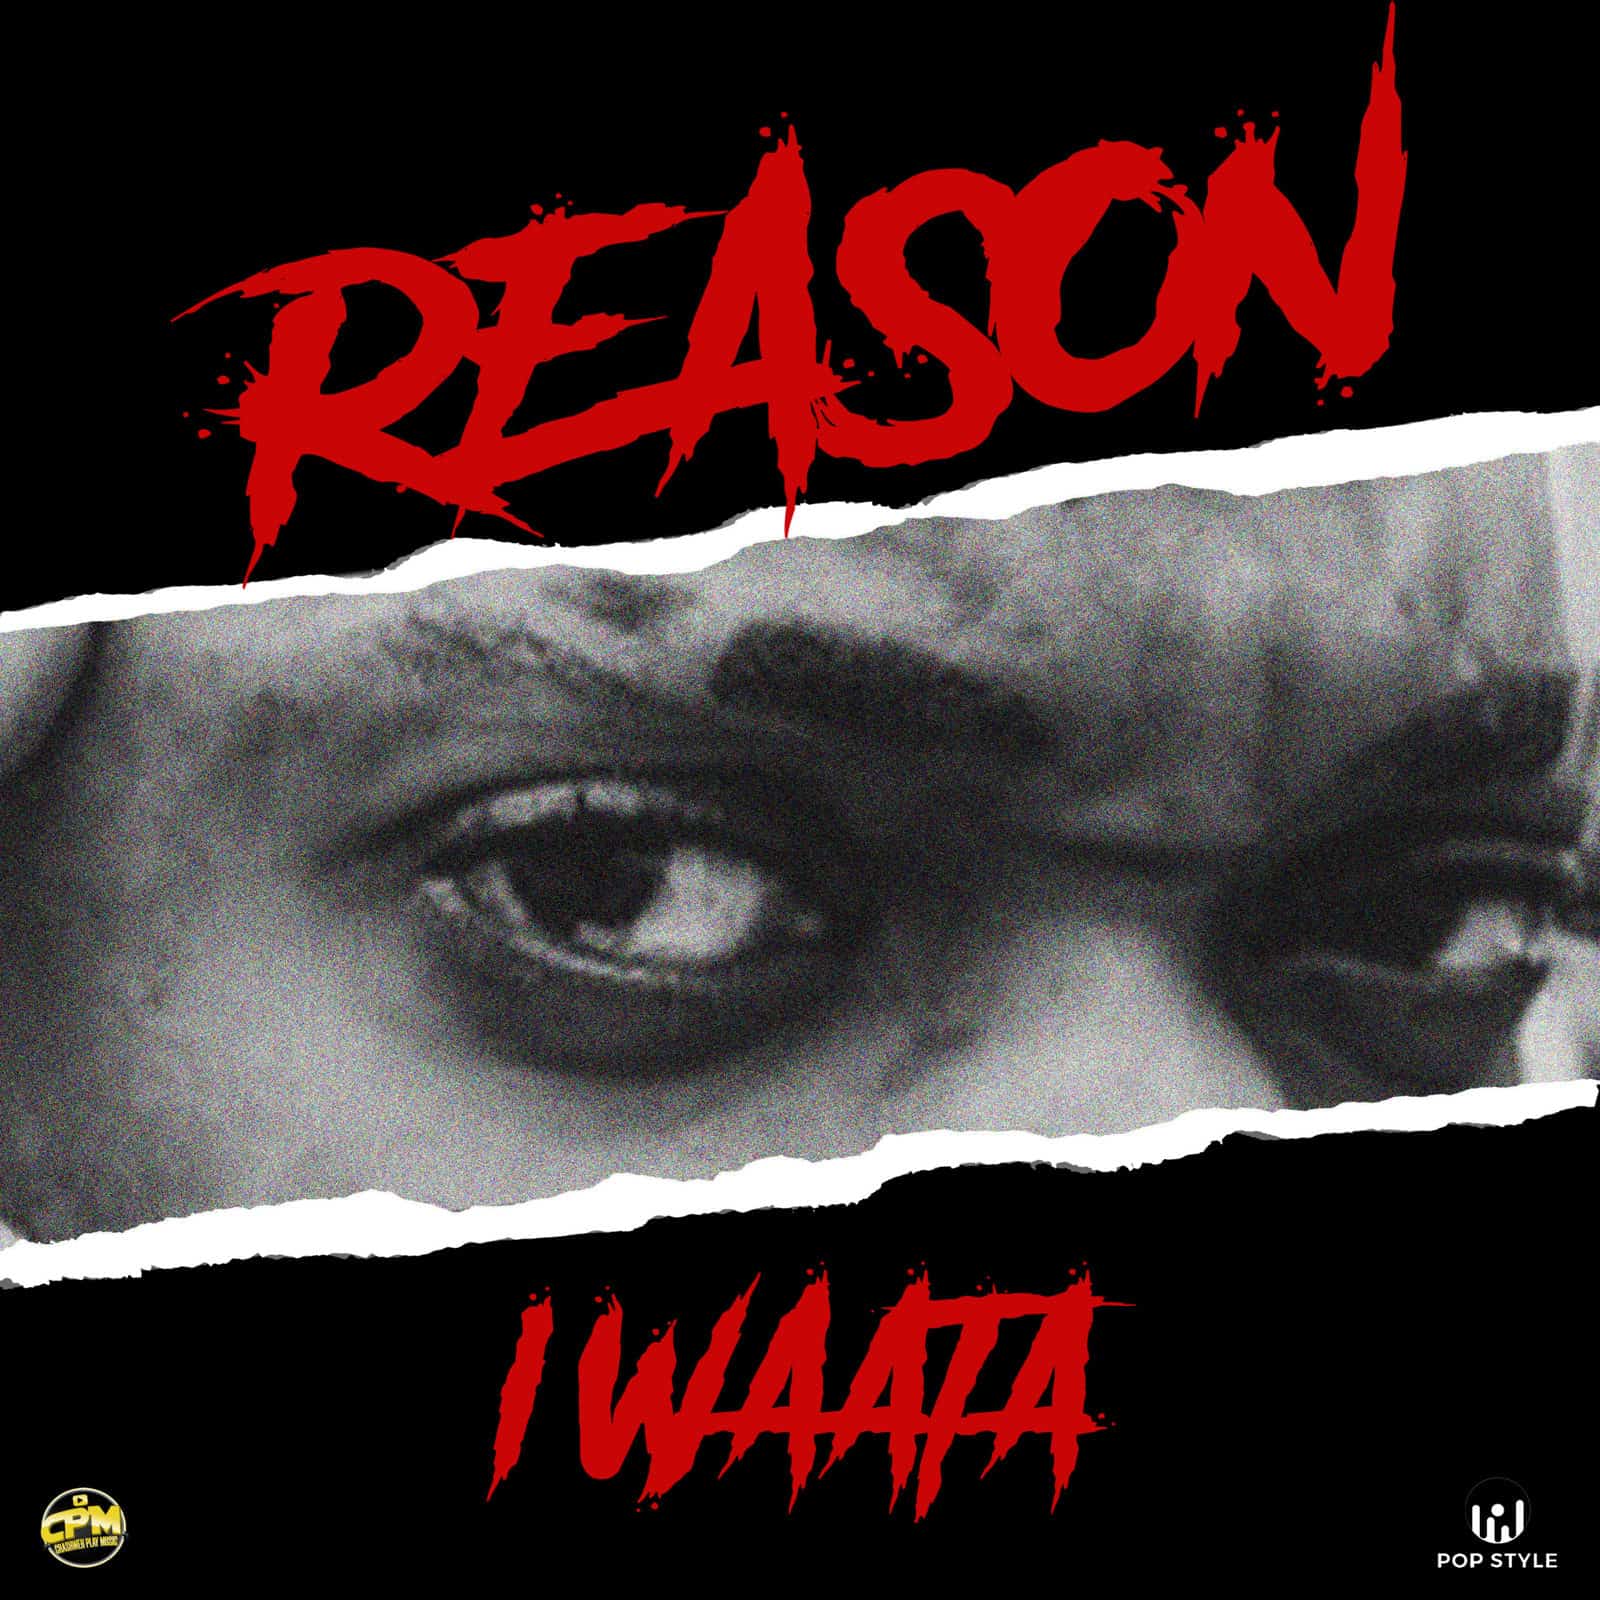 I Waata - Reason - Pop Style Music